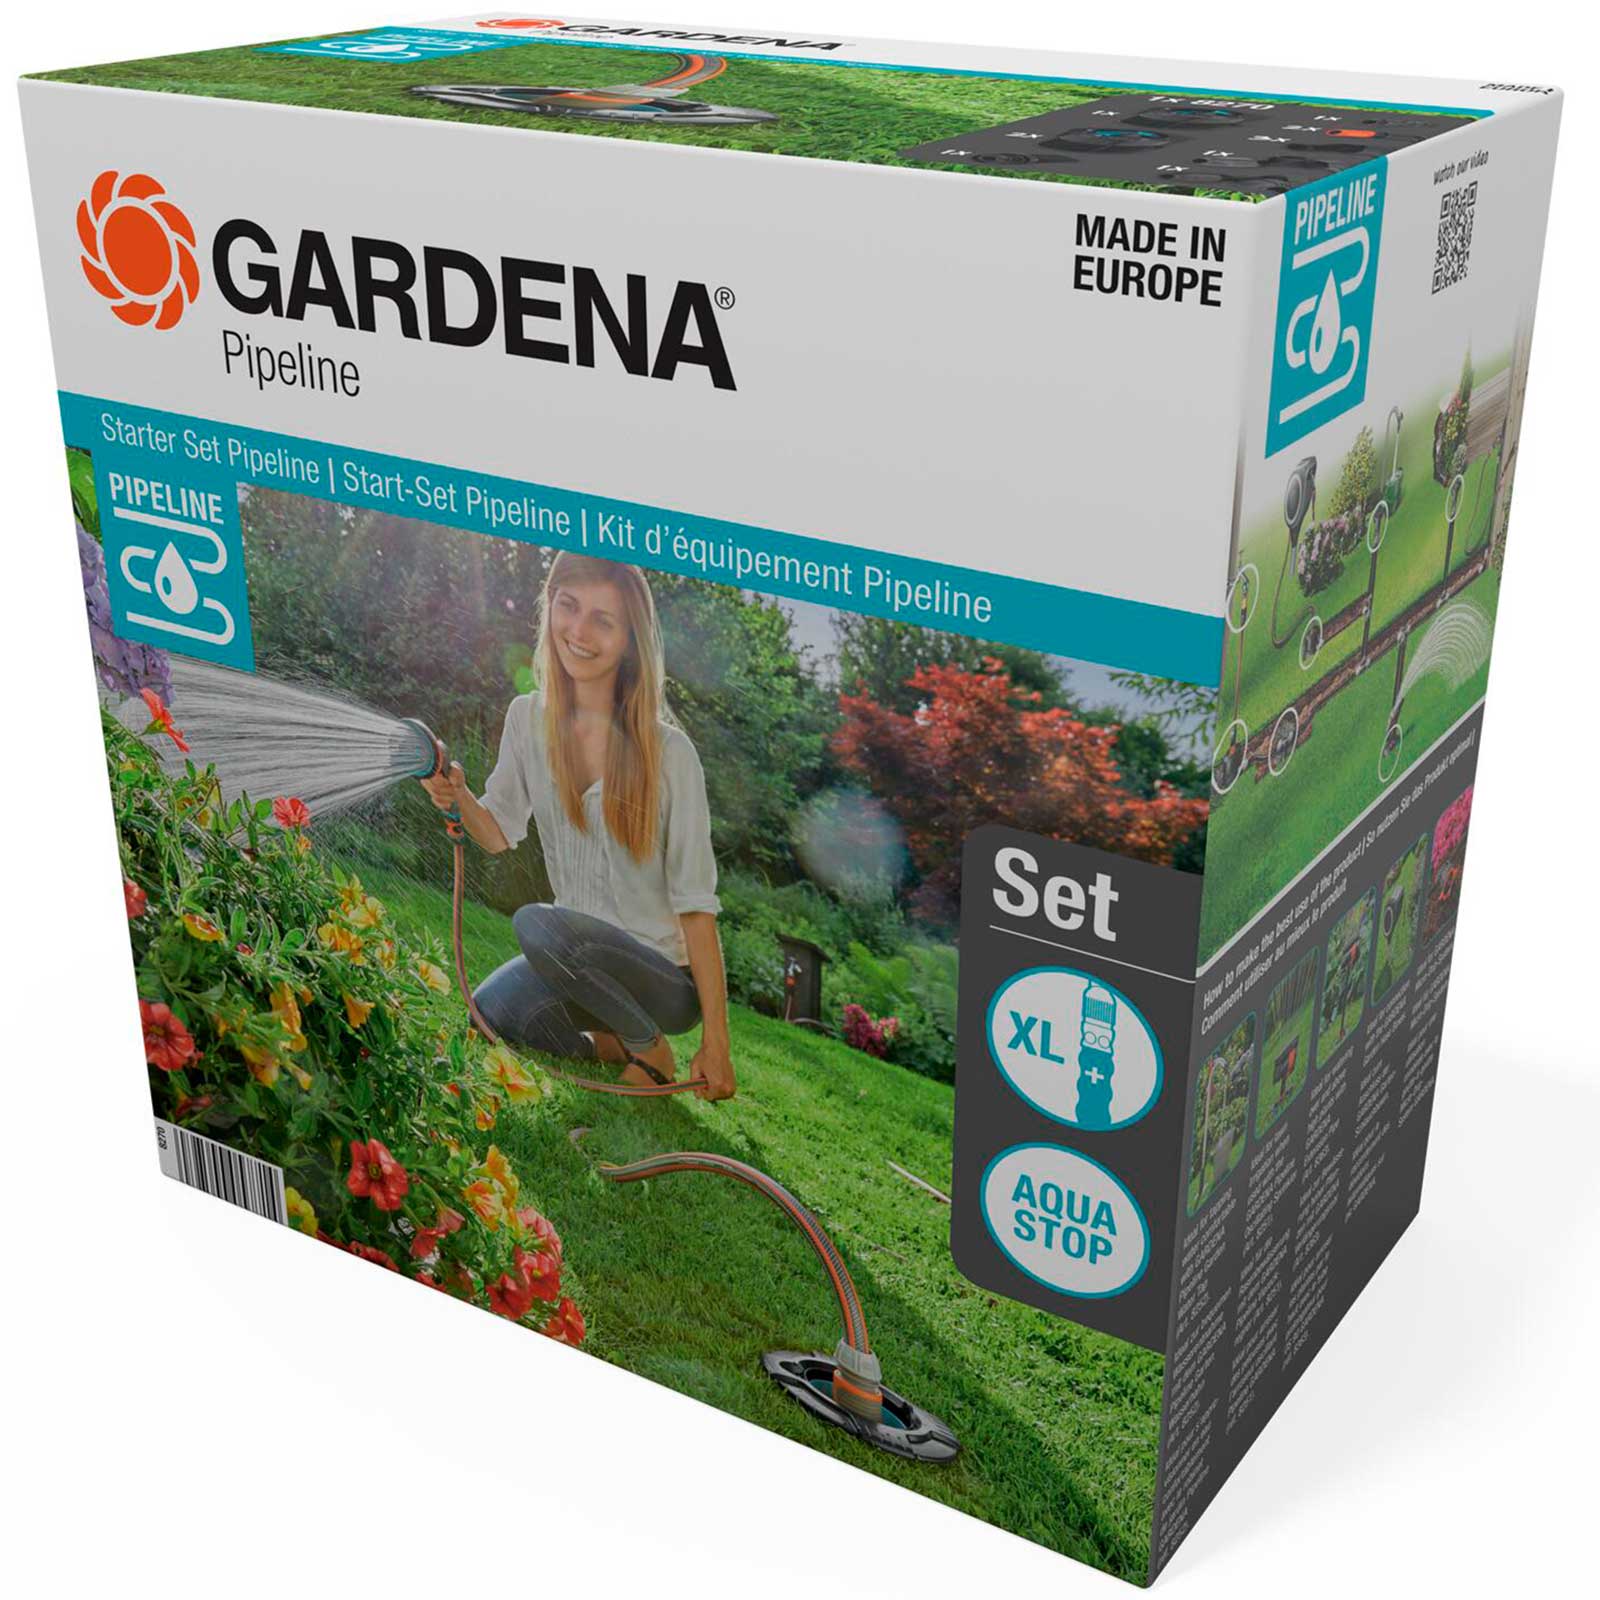 Image of Gardena PIPELINE Starter Set